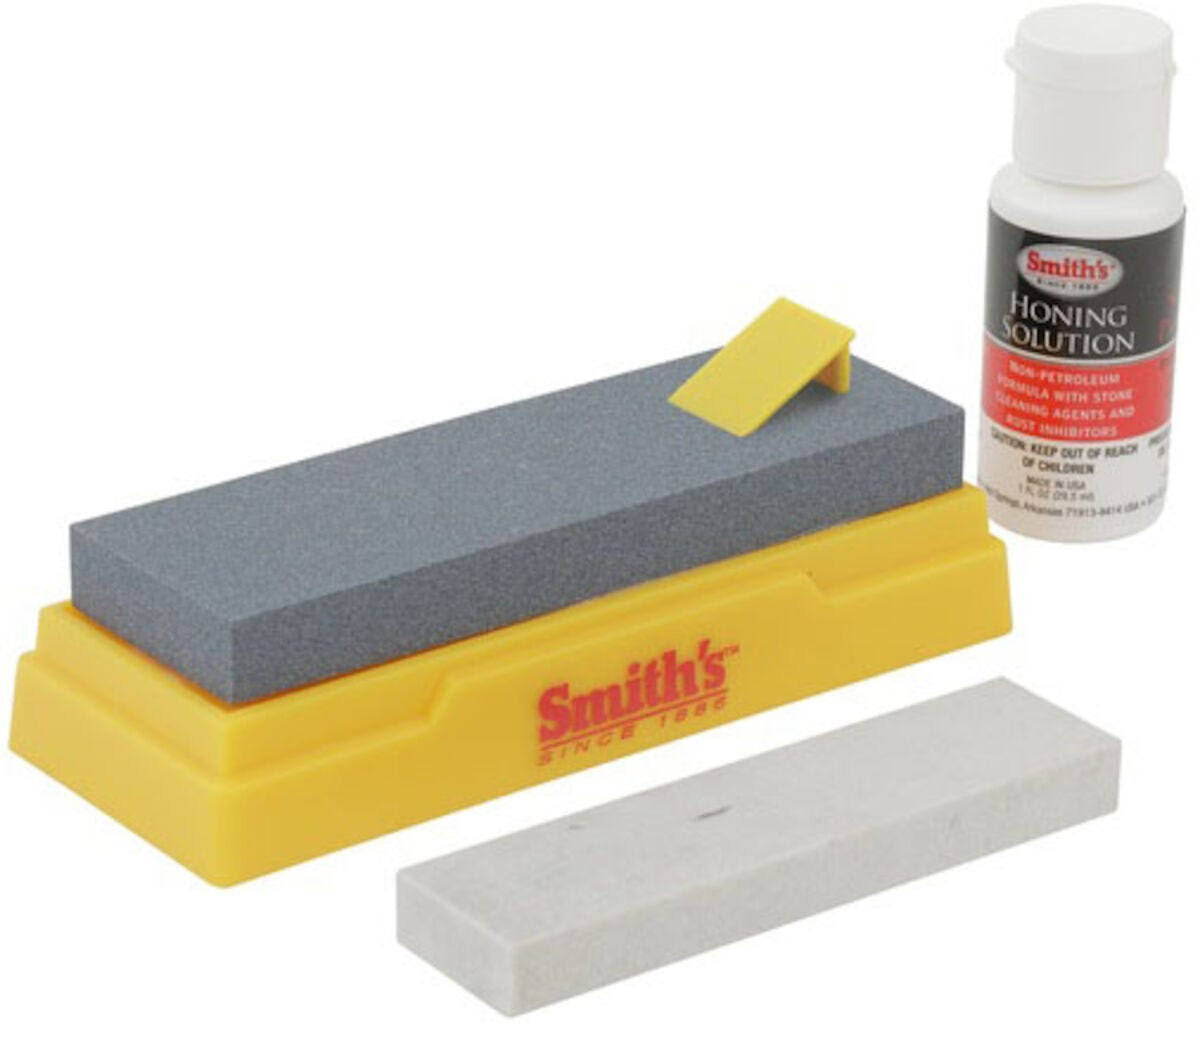 Smith's SK2 2-Stone Sharpening Kit